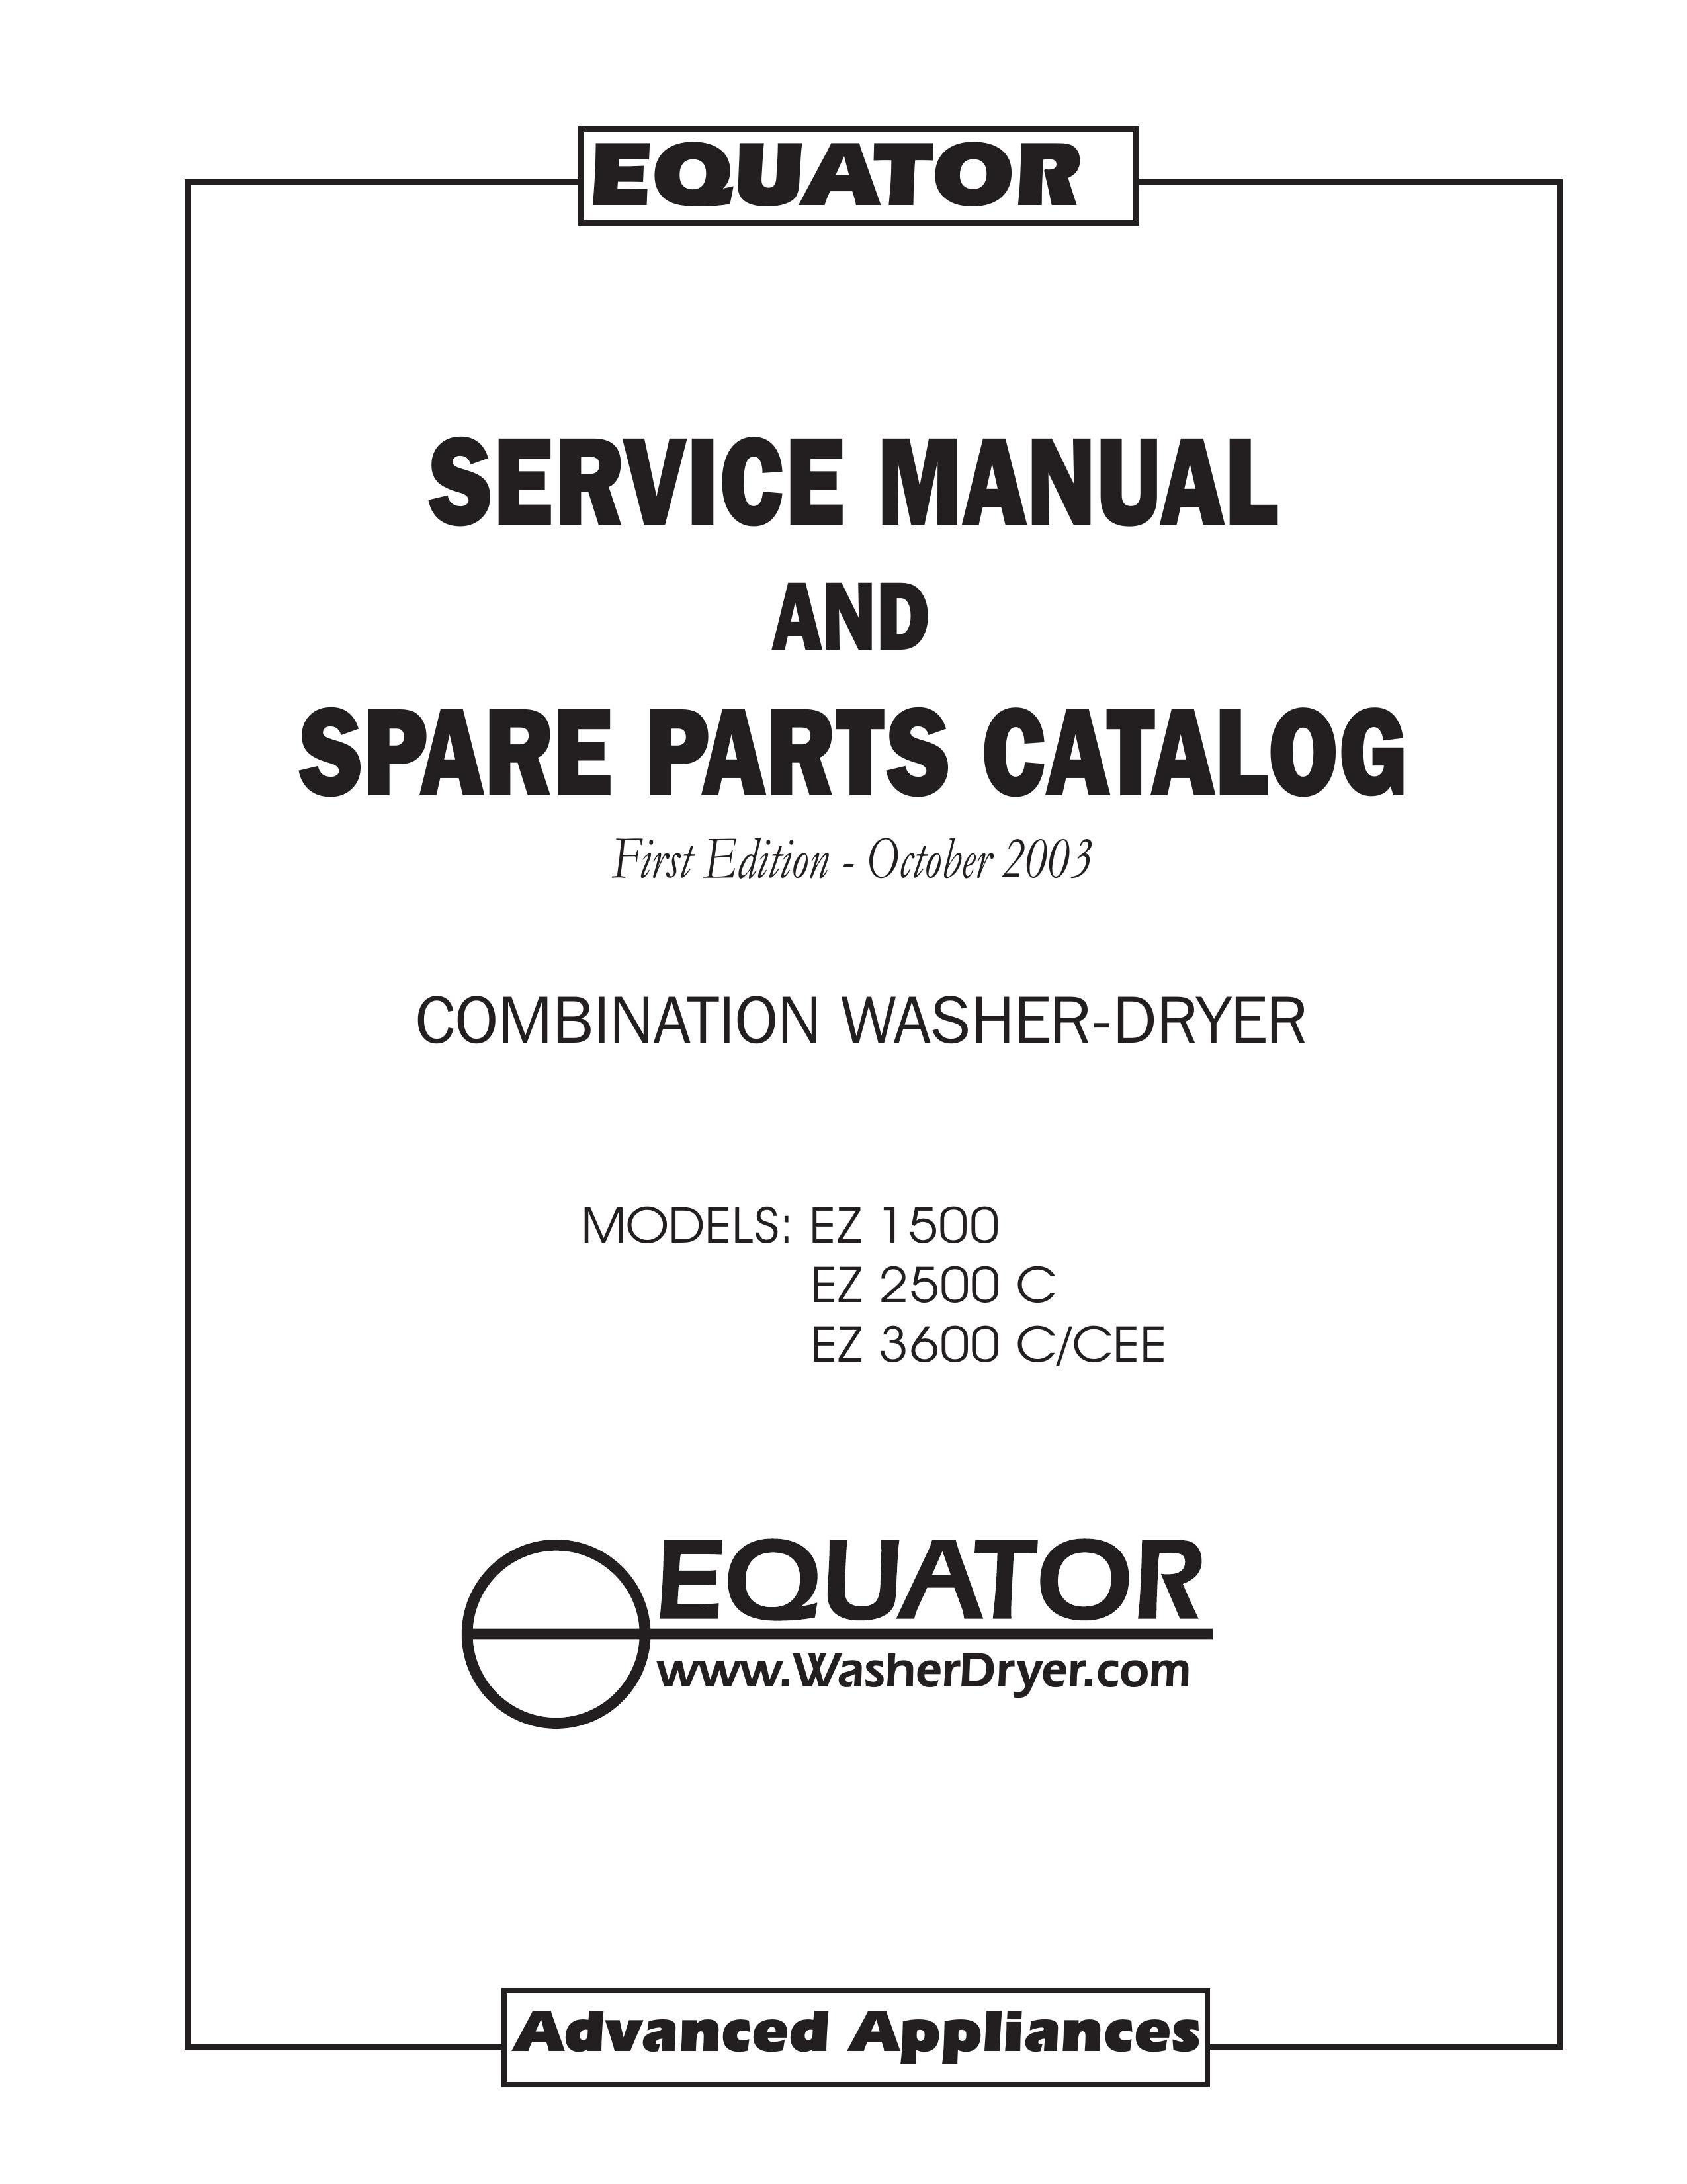 Equator EZ 3600 C/CEE Washer/Dryer User Manual